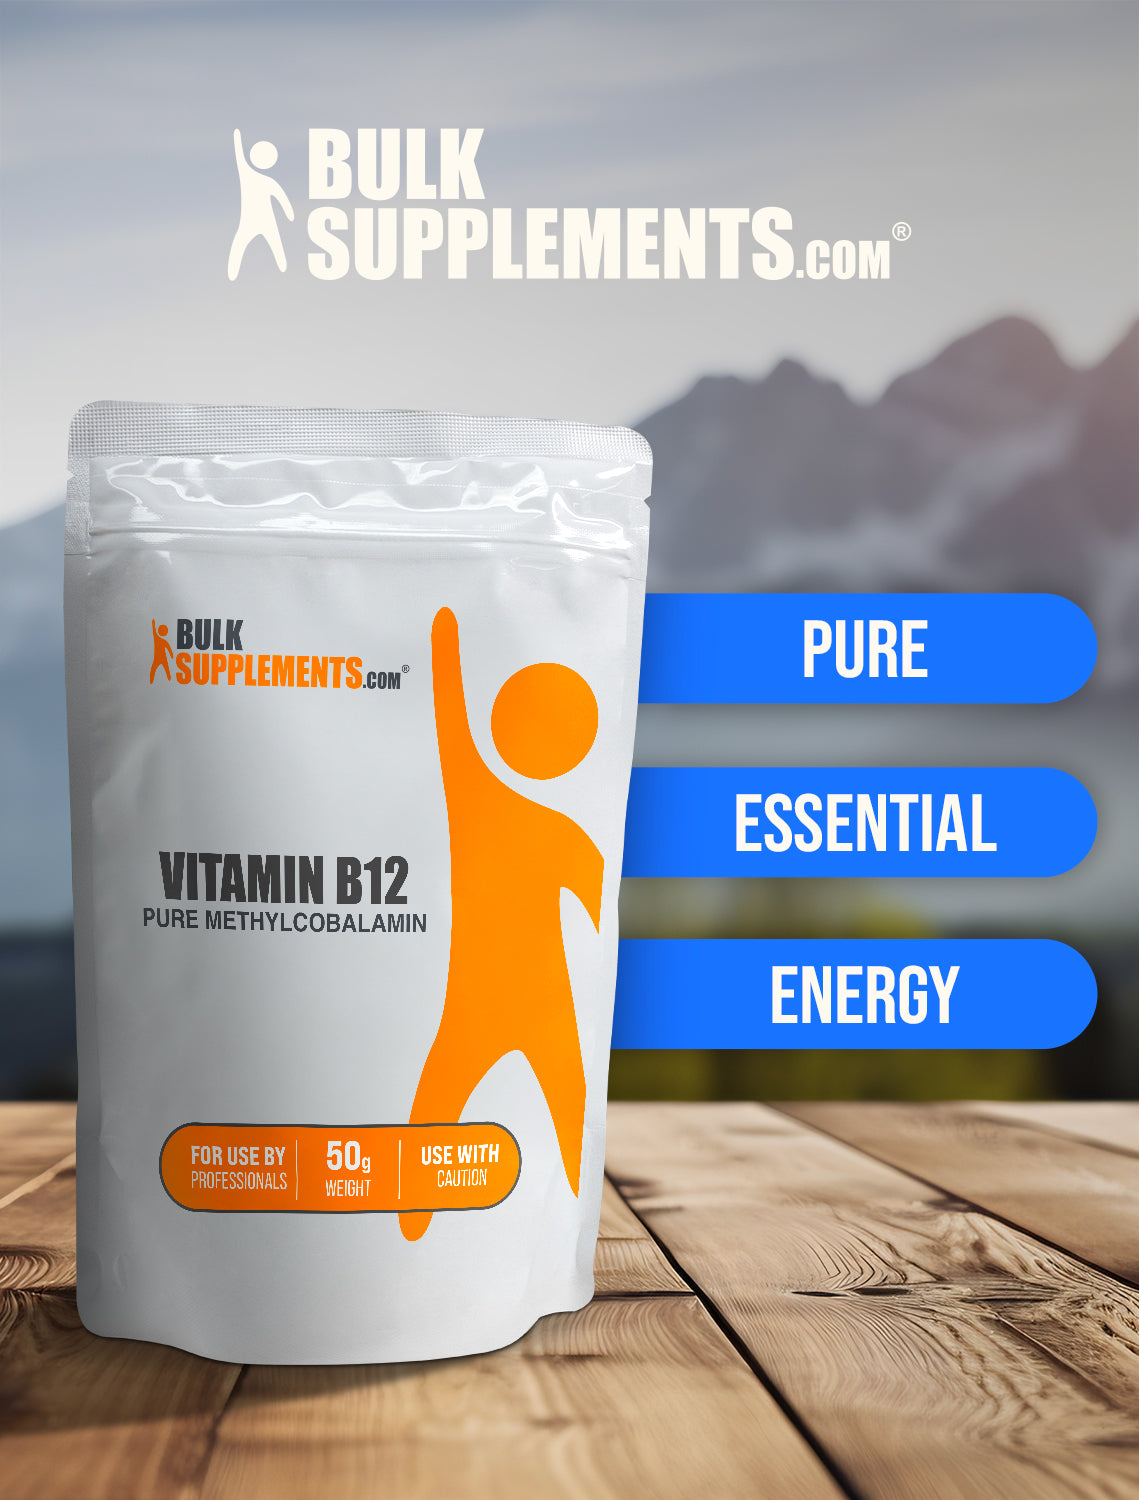 Vitamin B12 Pure Methylcobalamin powder keyword image 50g